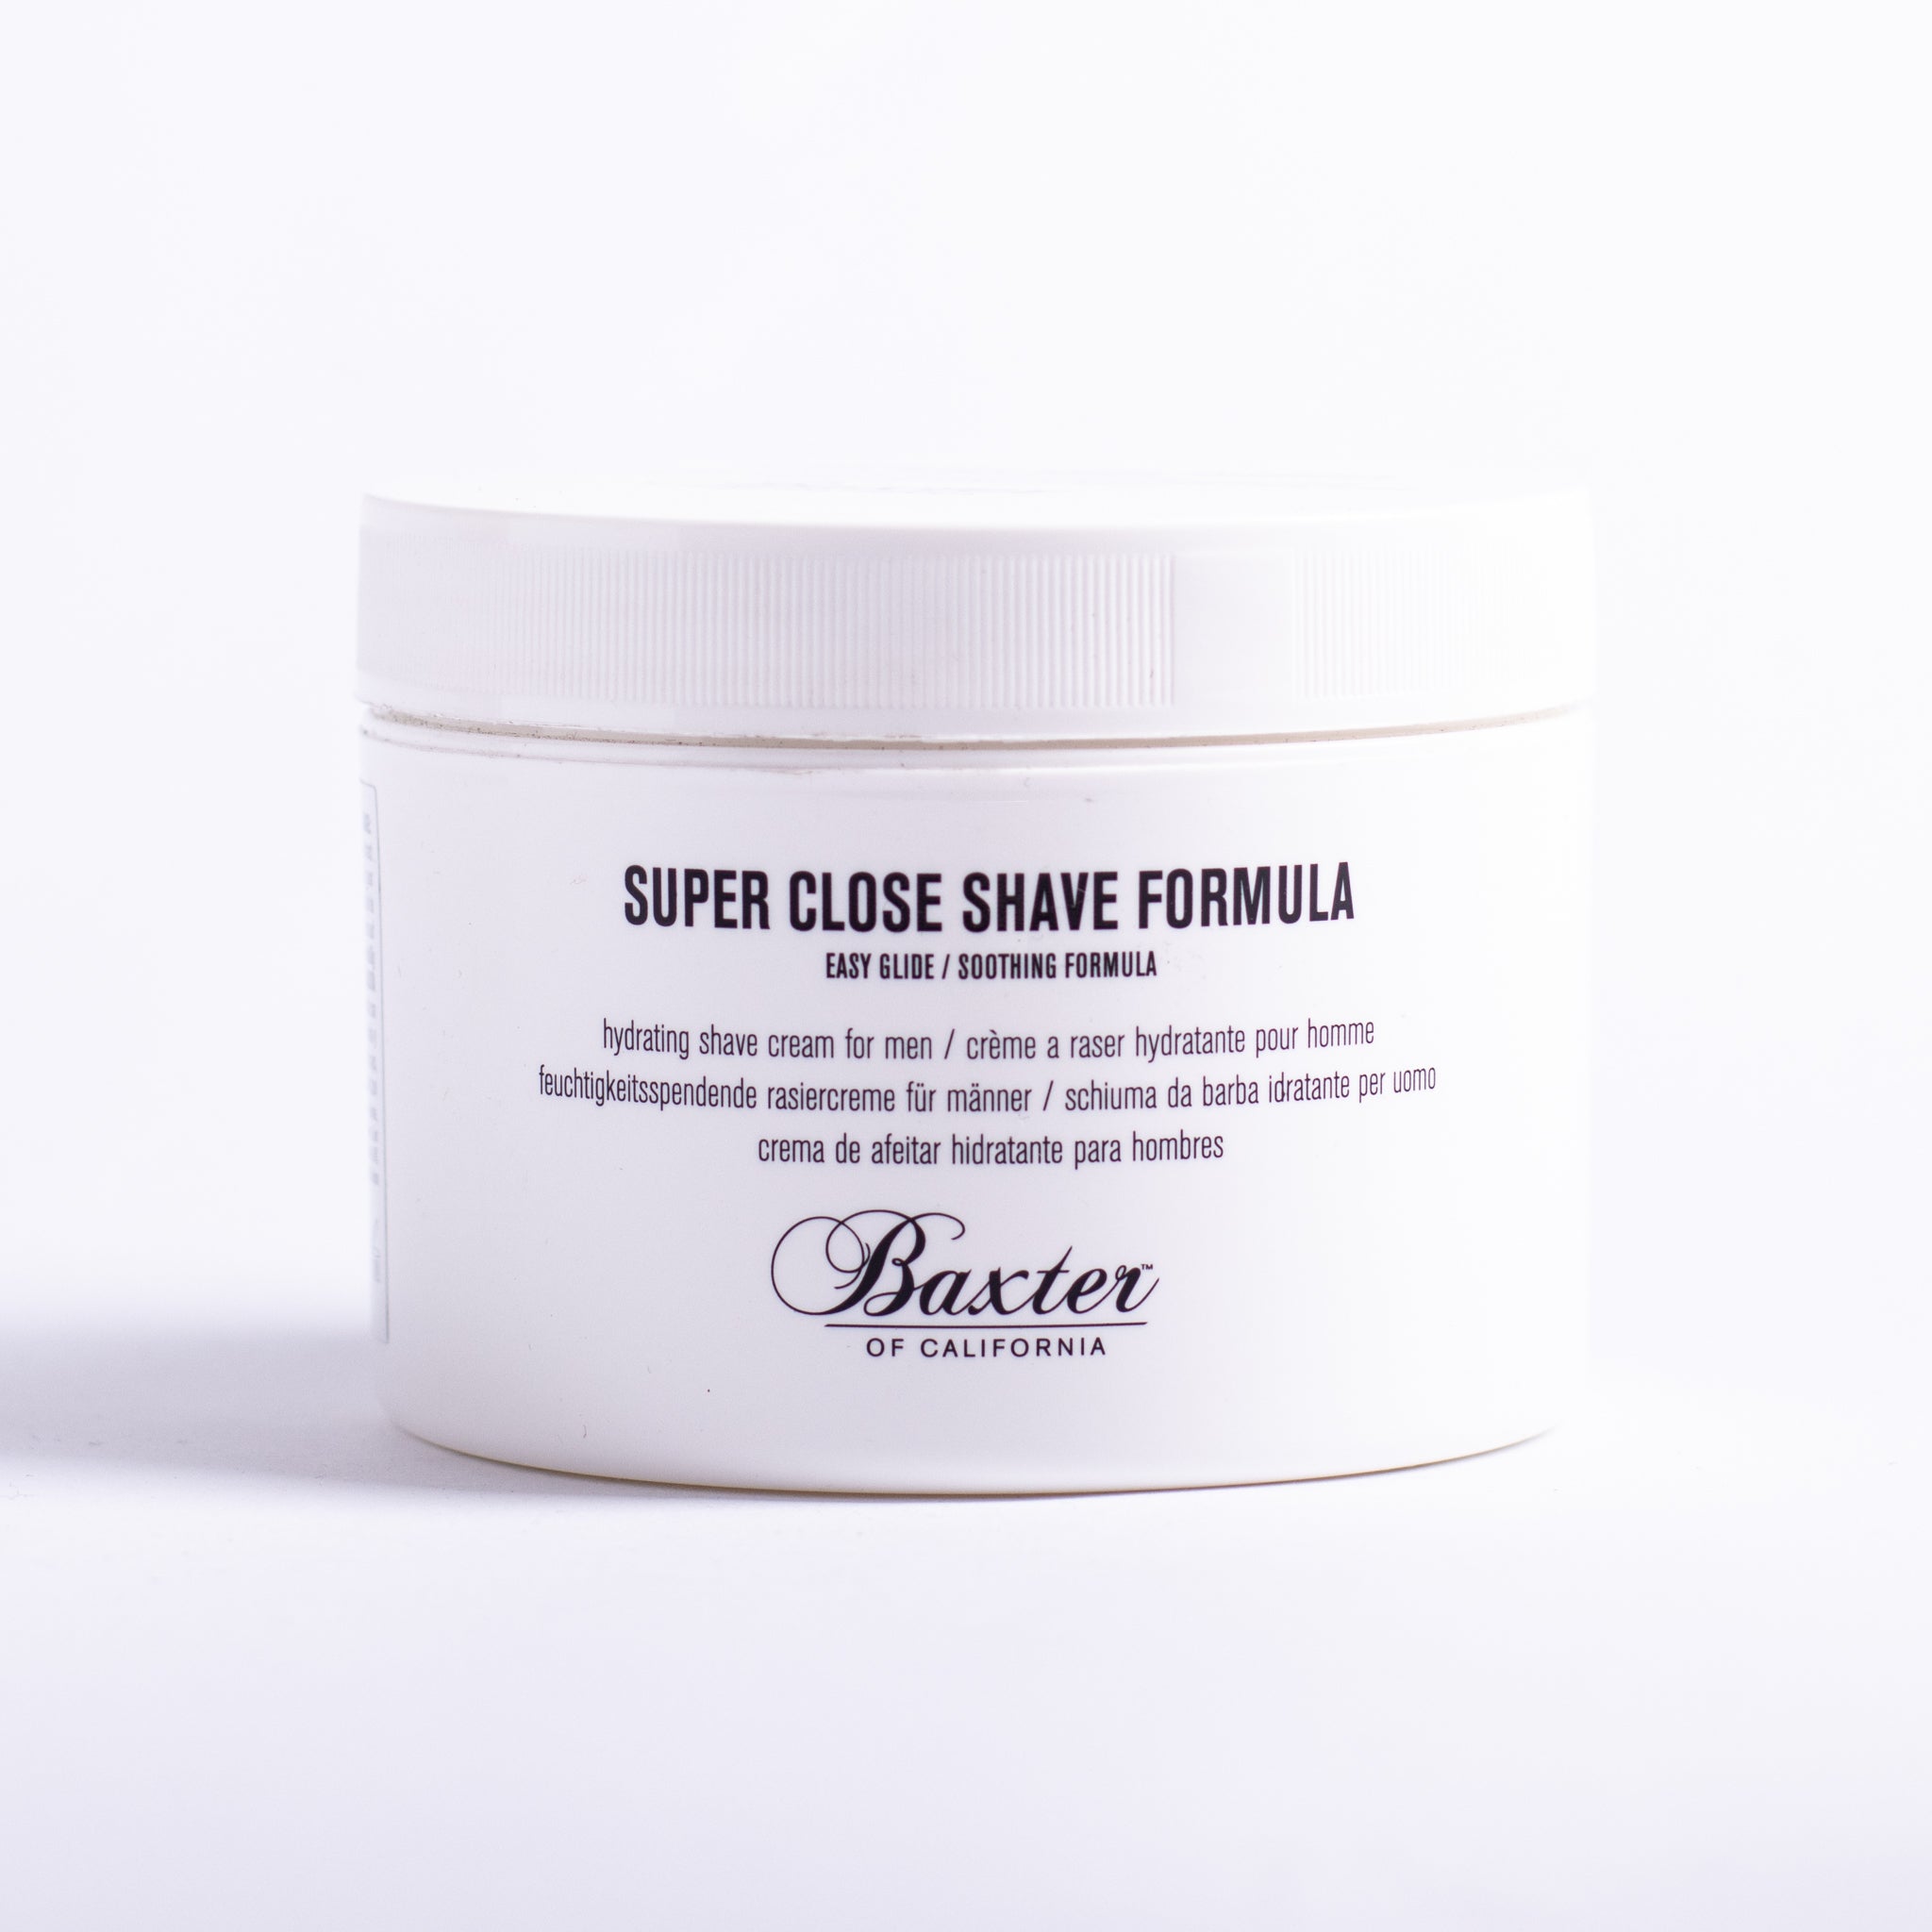 Super Close Shave Formula